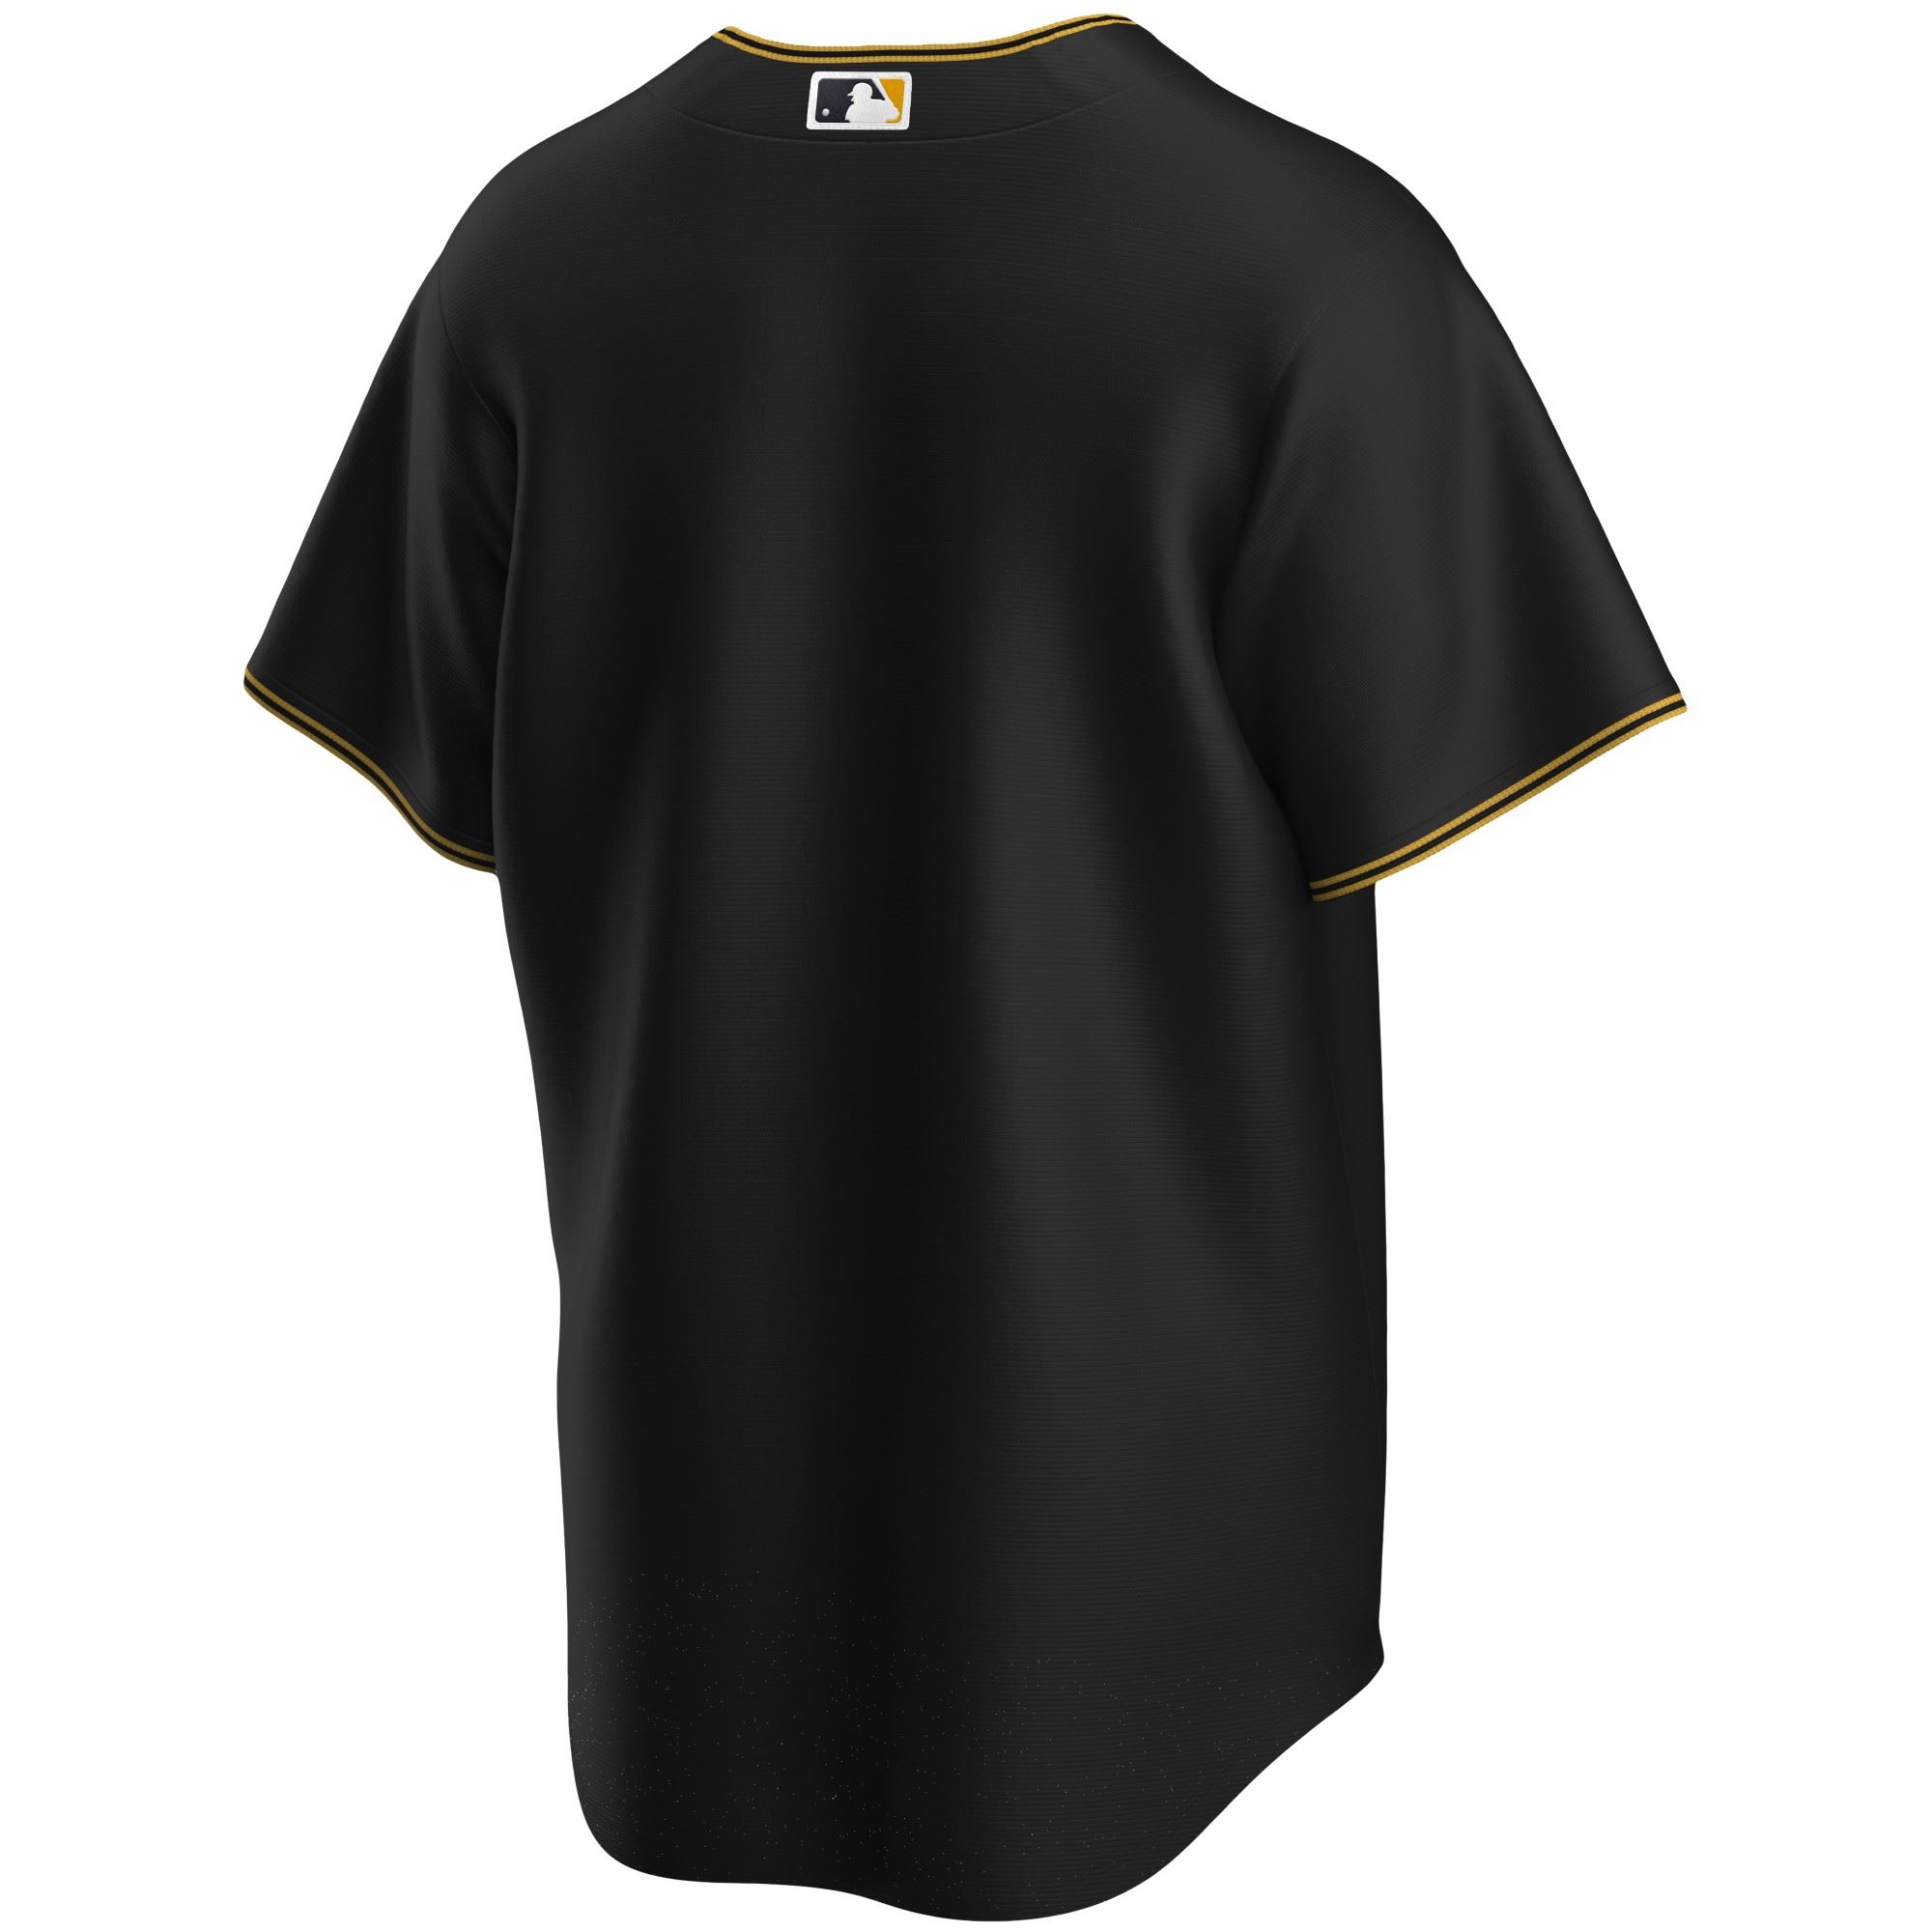 Pittsburgh Pirates Official MLB Replica Alternate Jersey Black Nike